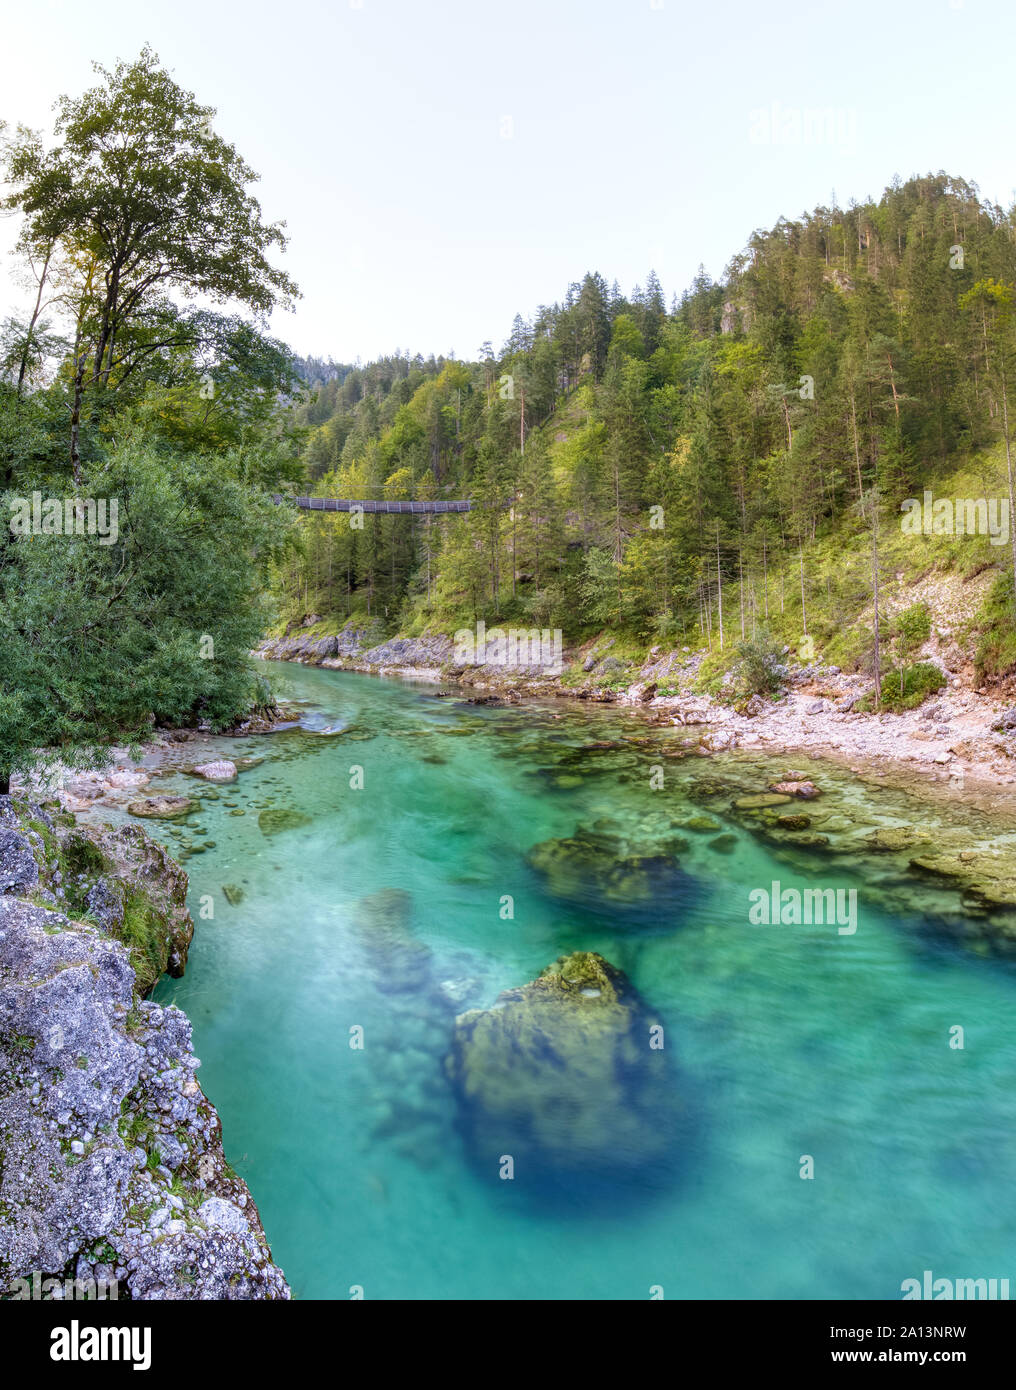 Wildwasserfluss in der Steiermark Foto Stock